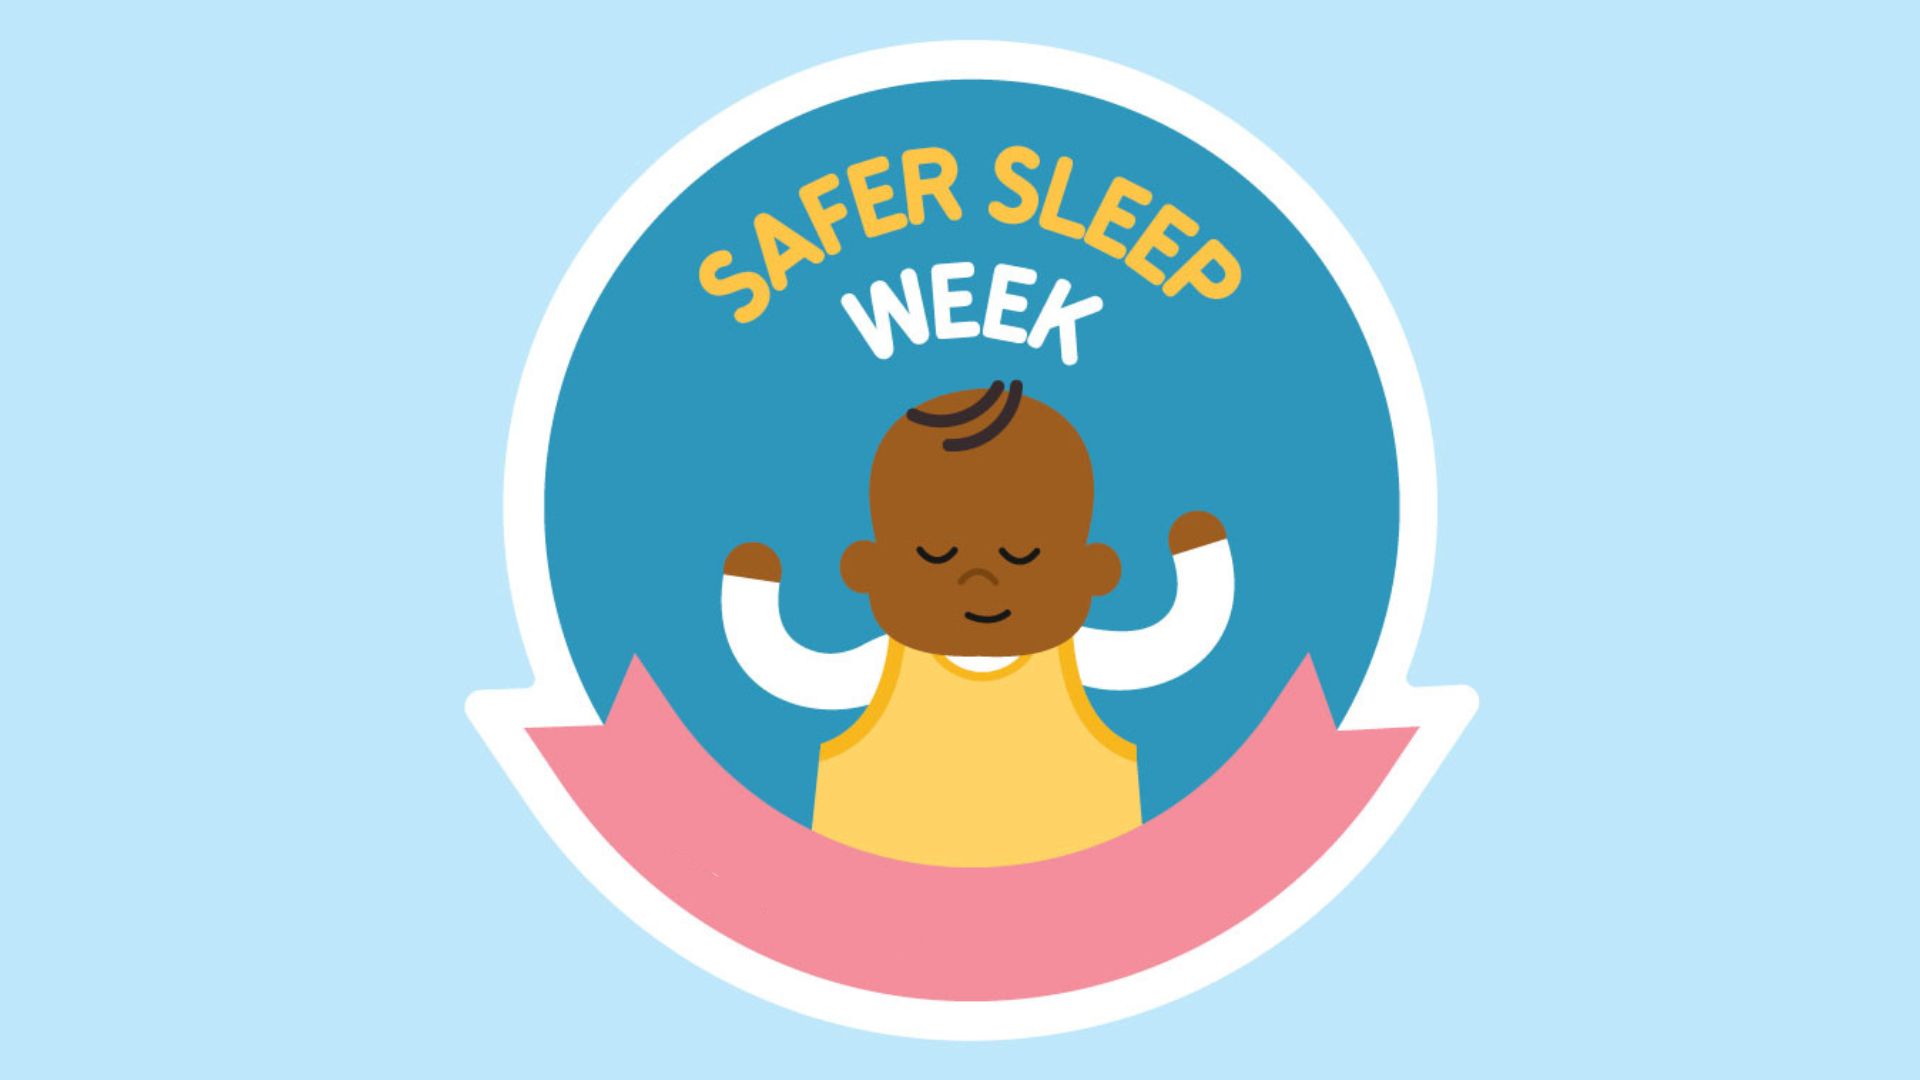 Safer sleep week logo - no dates